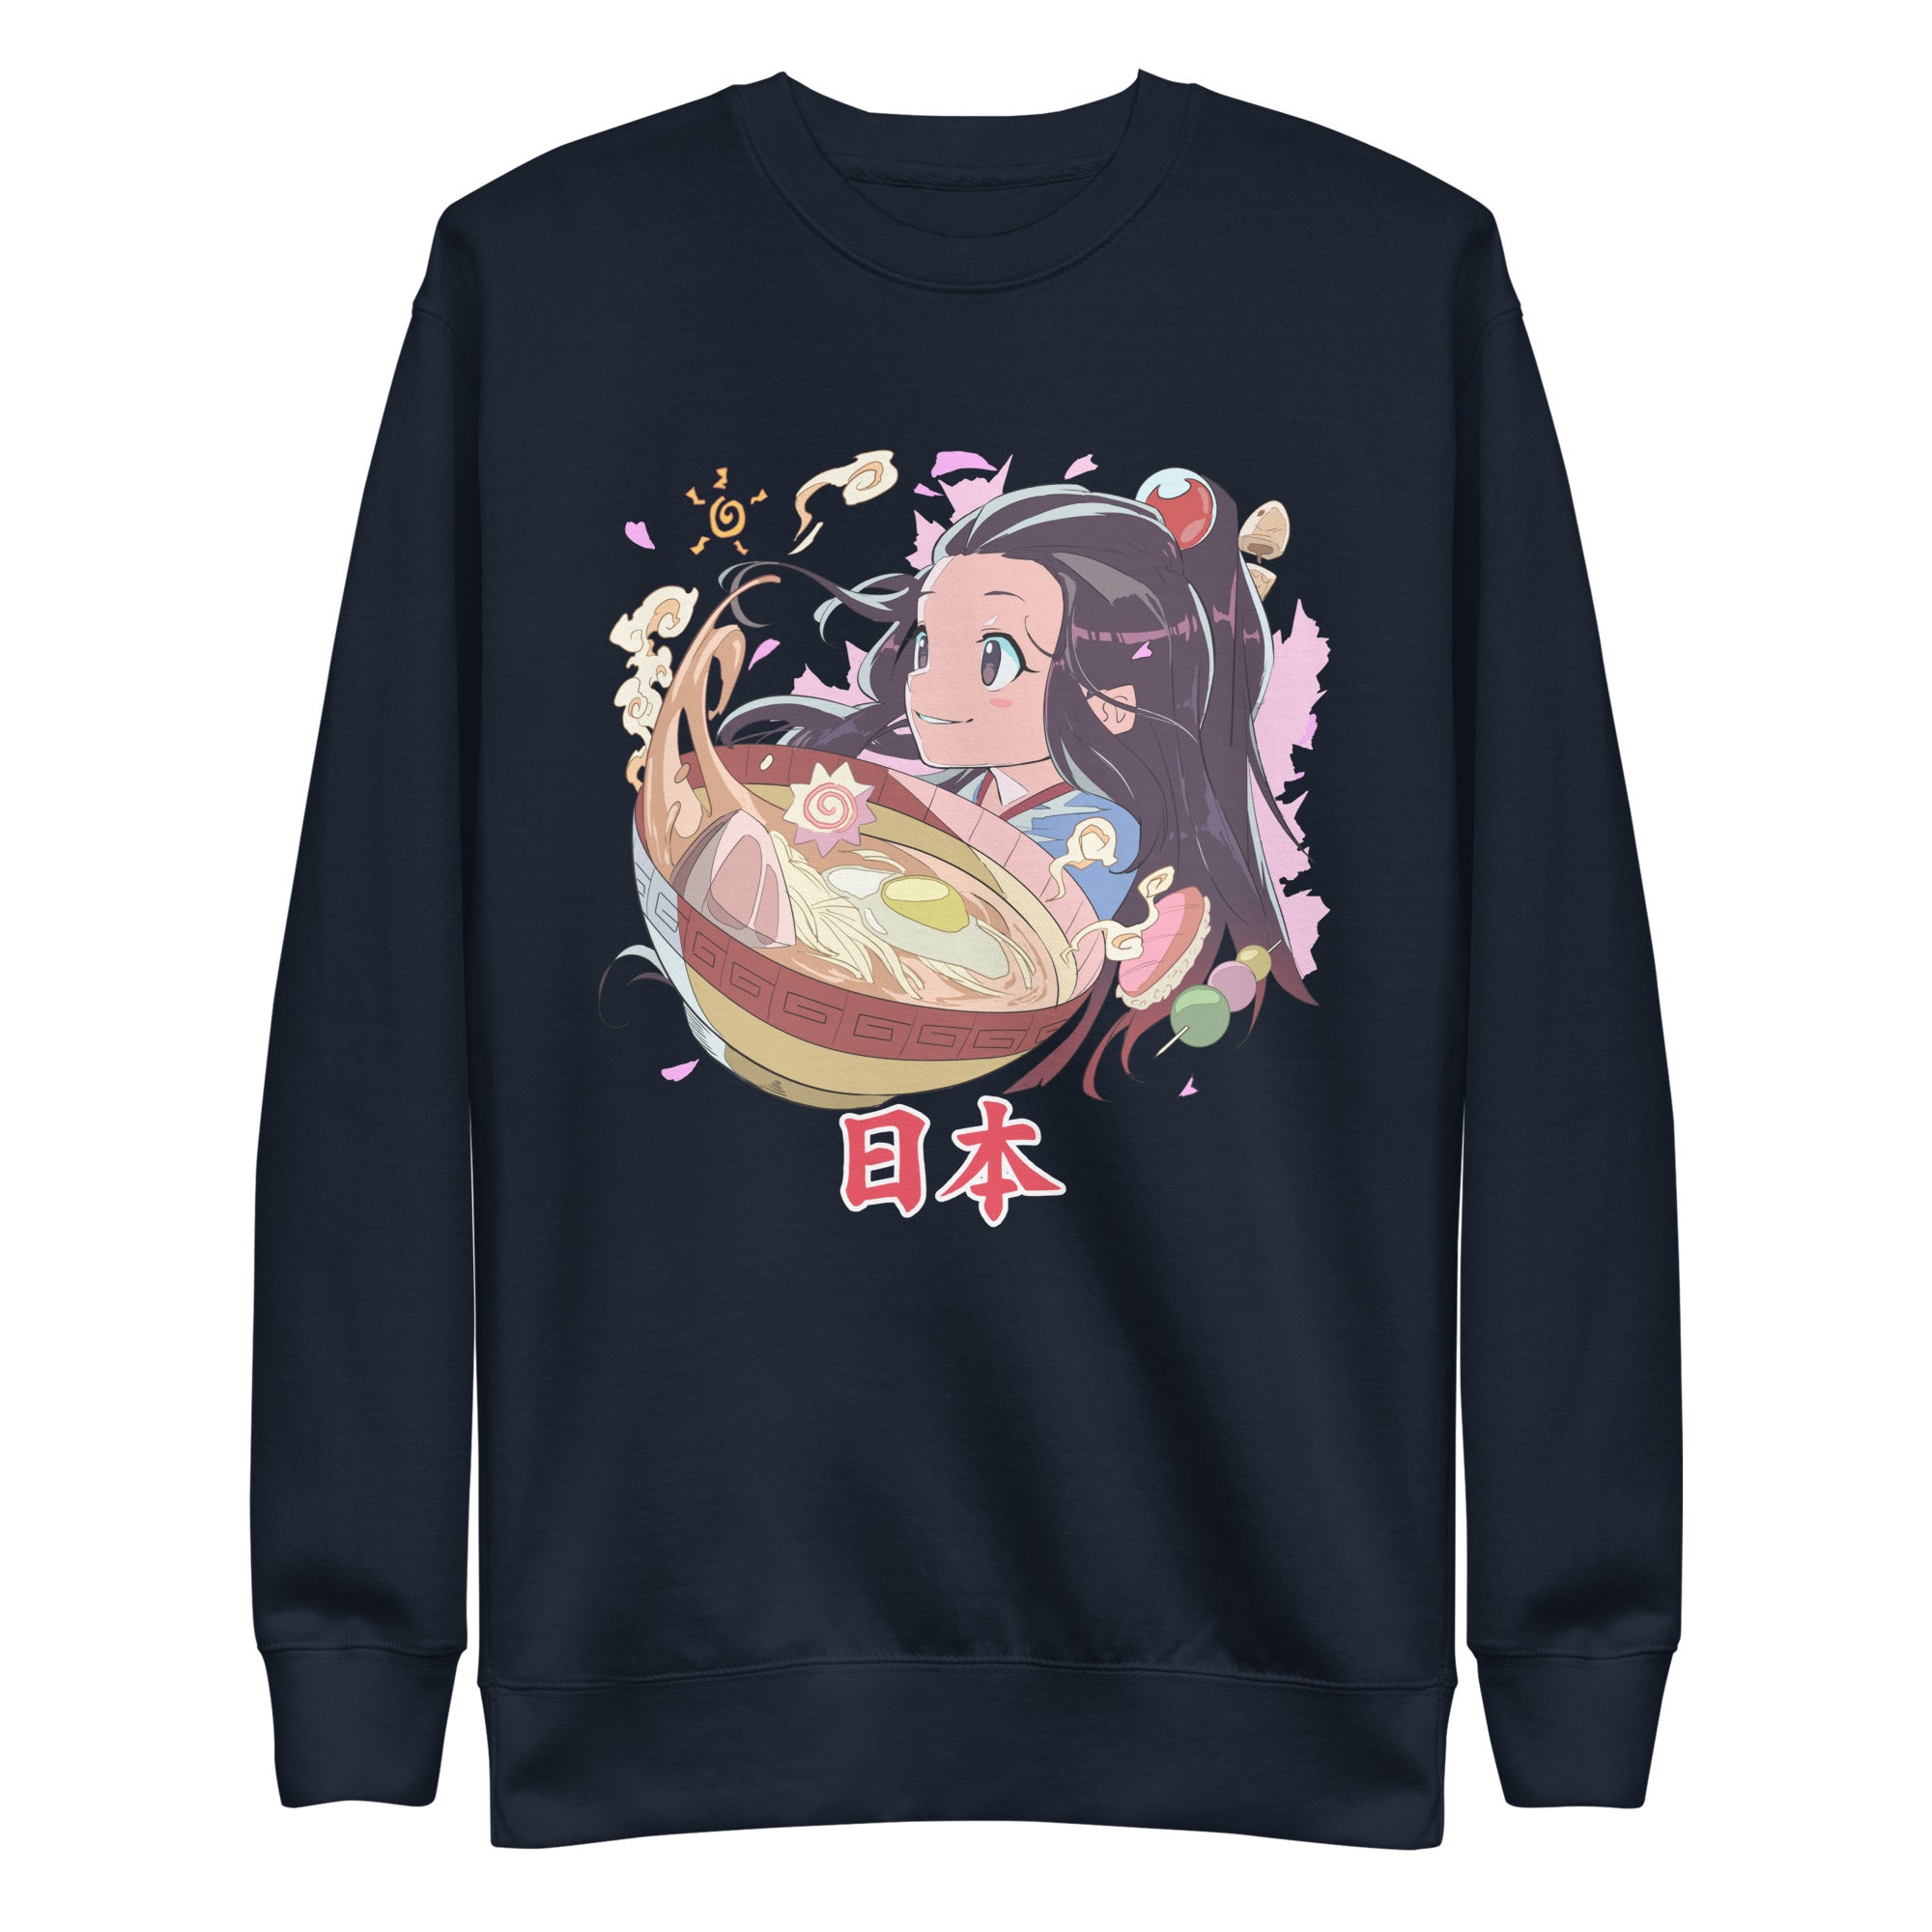 CW Japan - Unisex Premium Sweatshirt